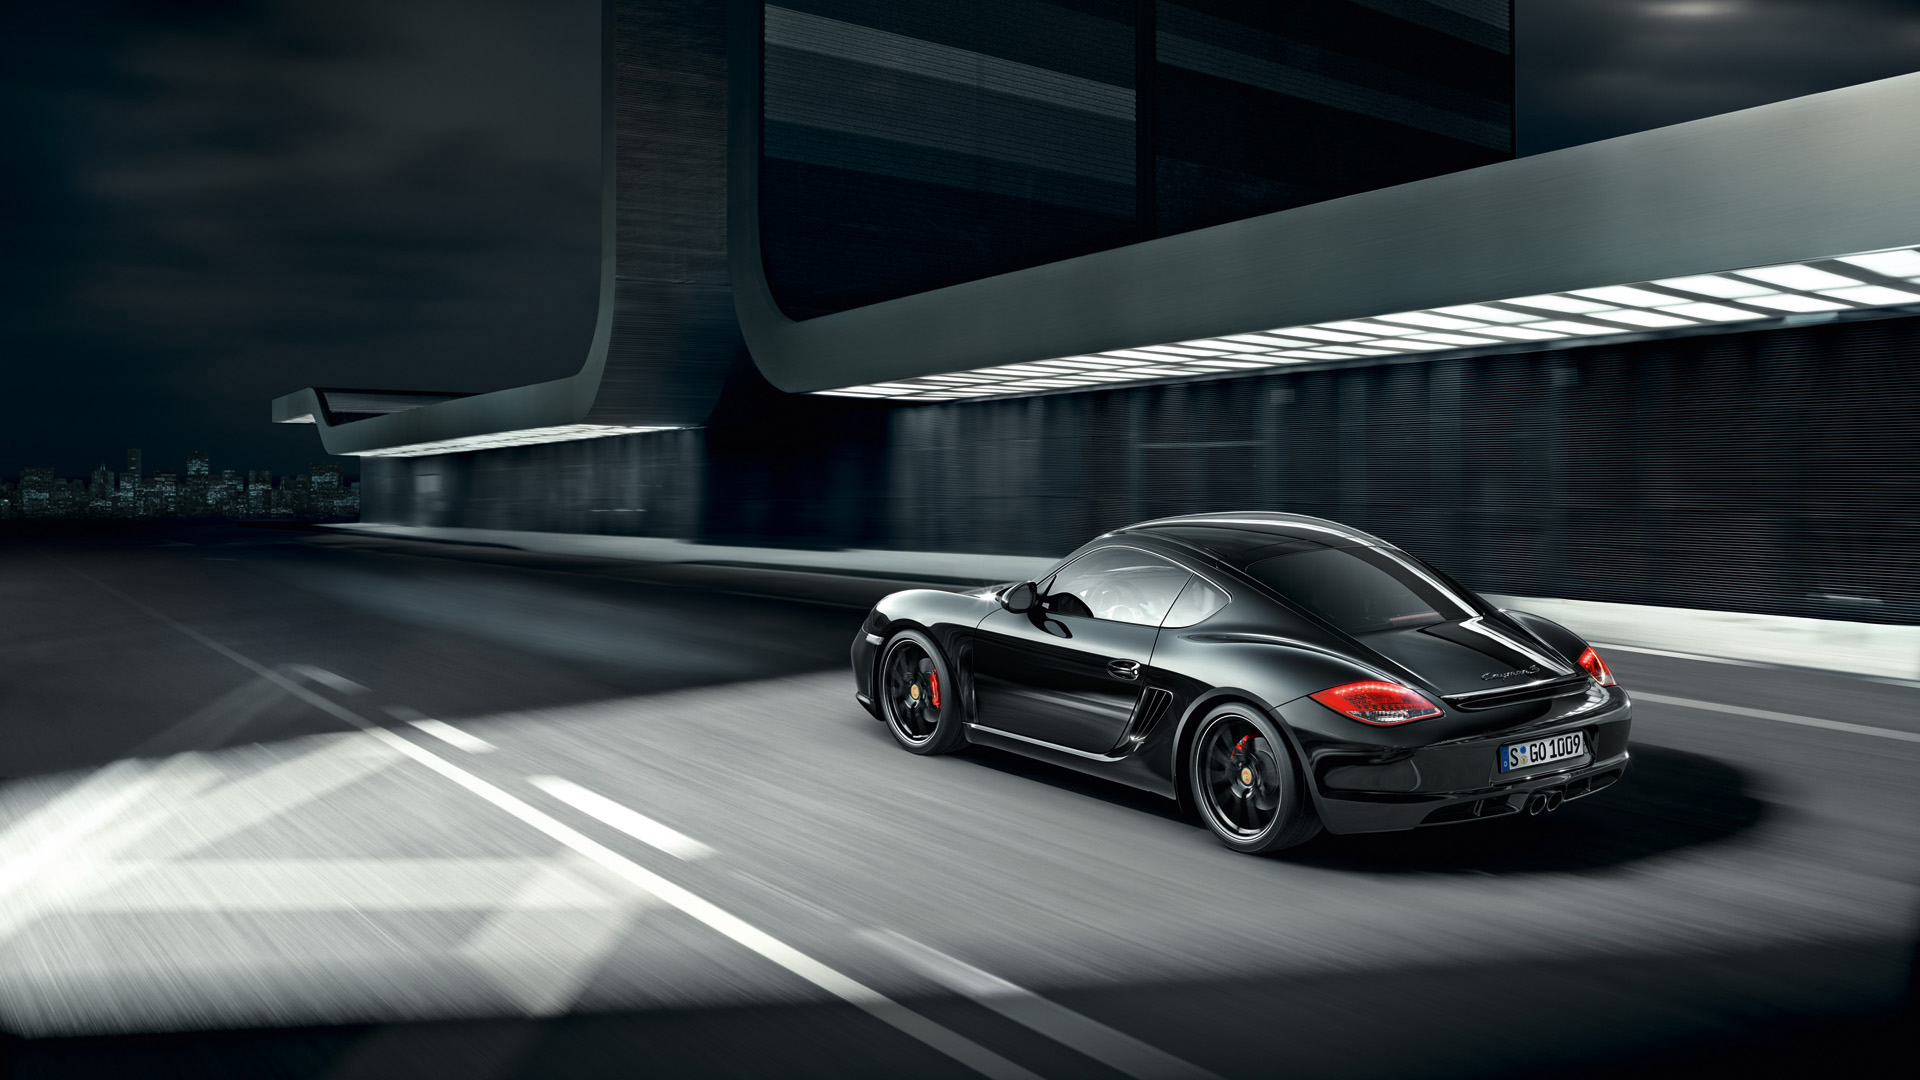 Porsche Cayman S Black Edition Wallpaper HD Image